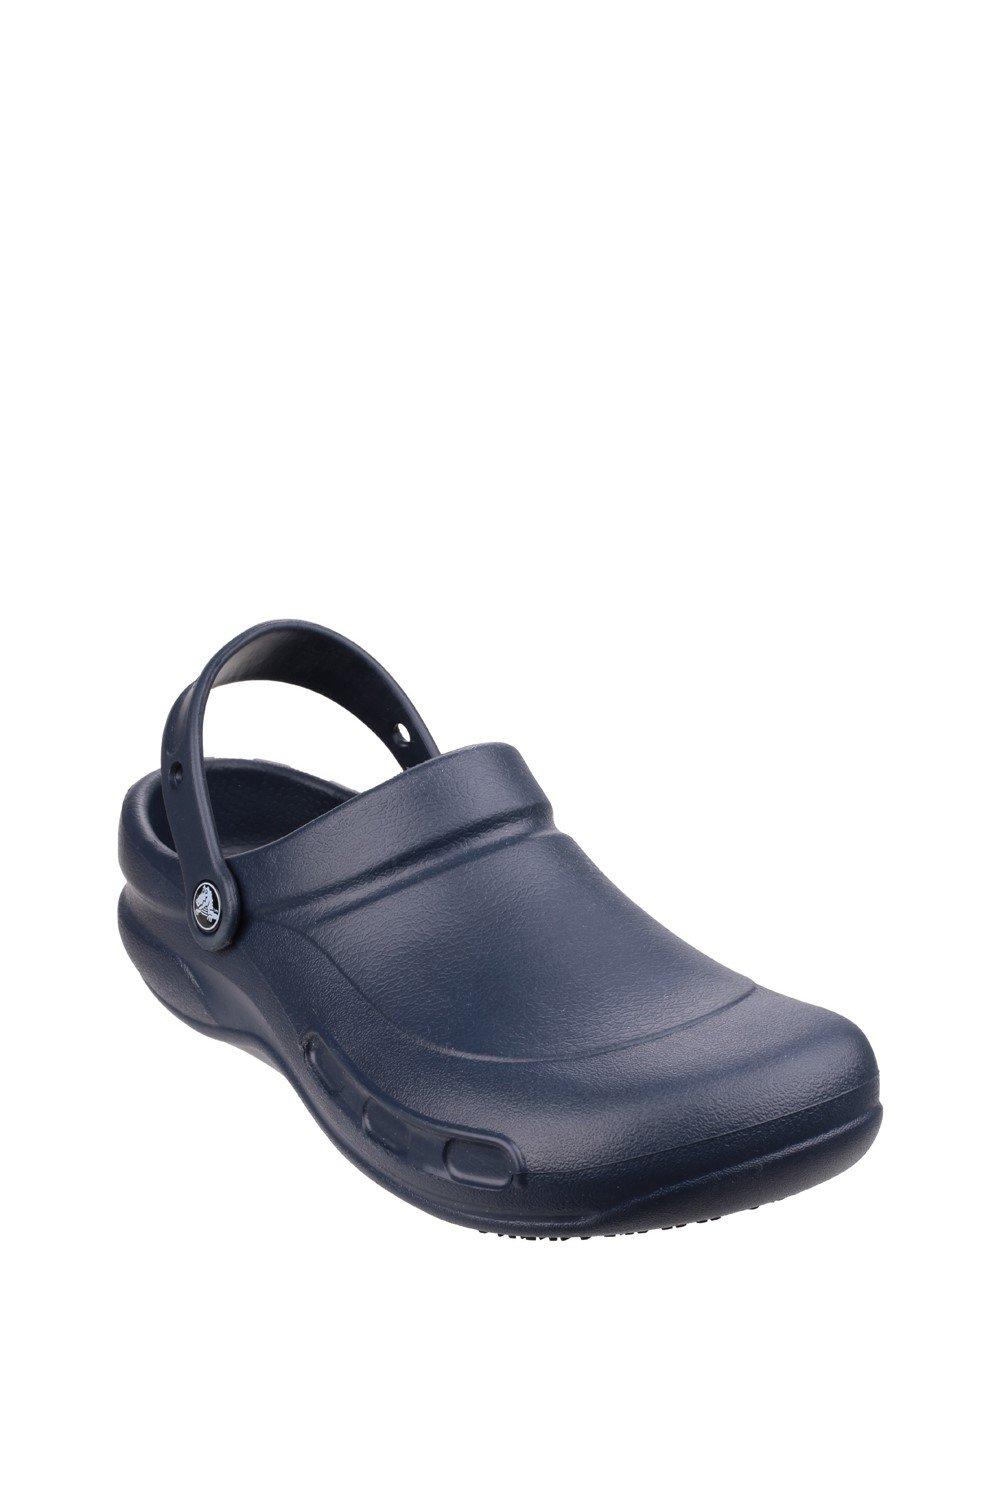 Туфли-слипоны из термопластика Бистро Crocs, темно-синий туфли слипоны из термопластика бистро crocs черный